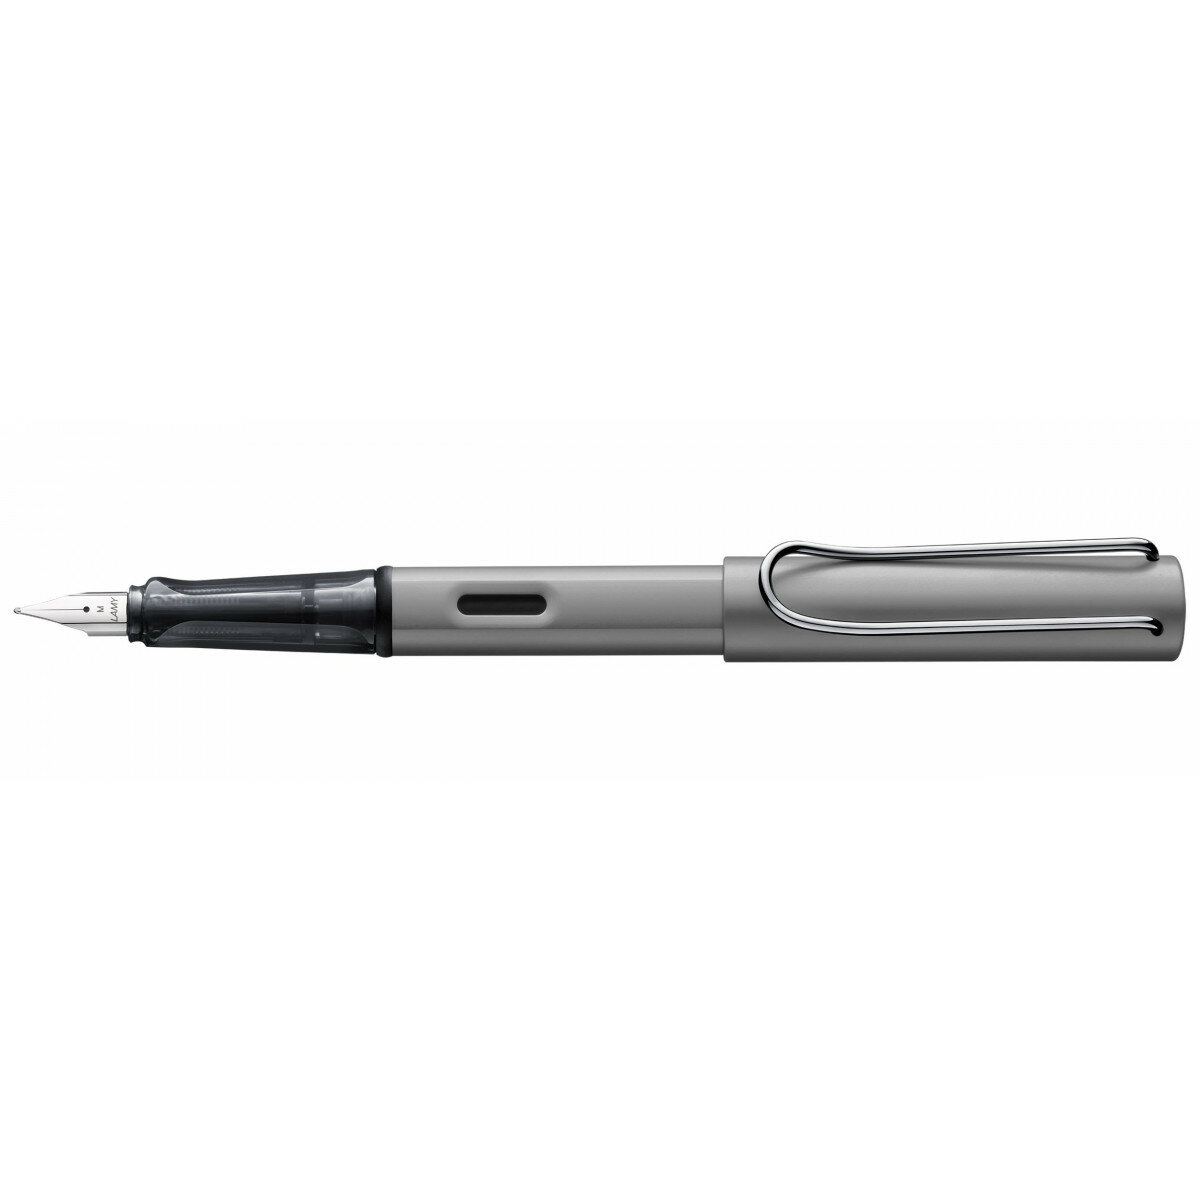 Перьевая ручка Lamy Al-star Graphite Gray перо F (4000300)